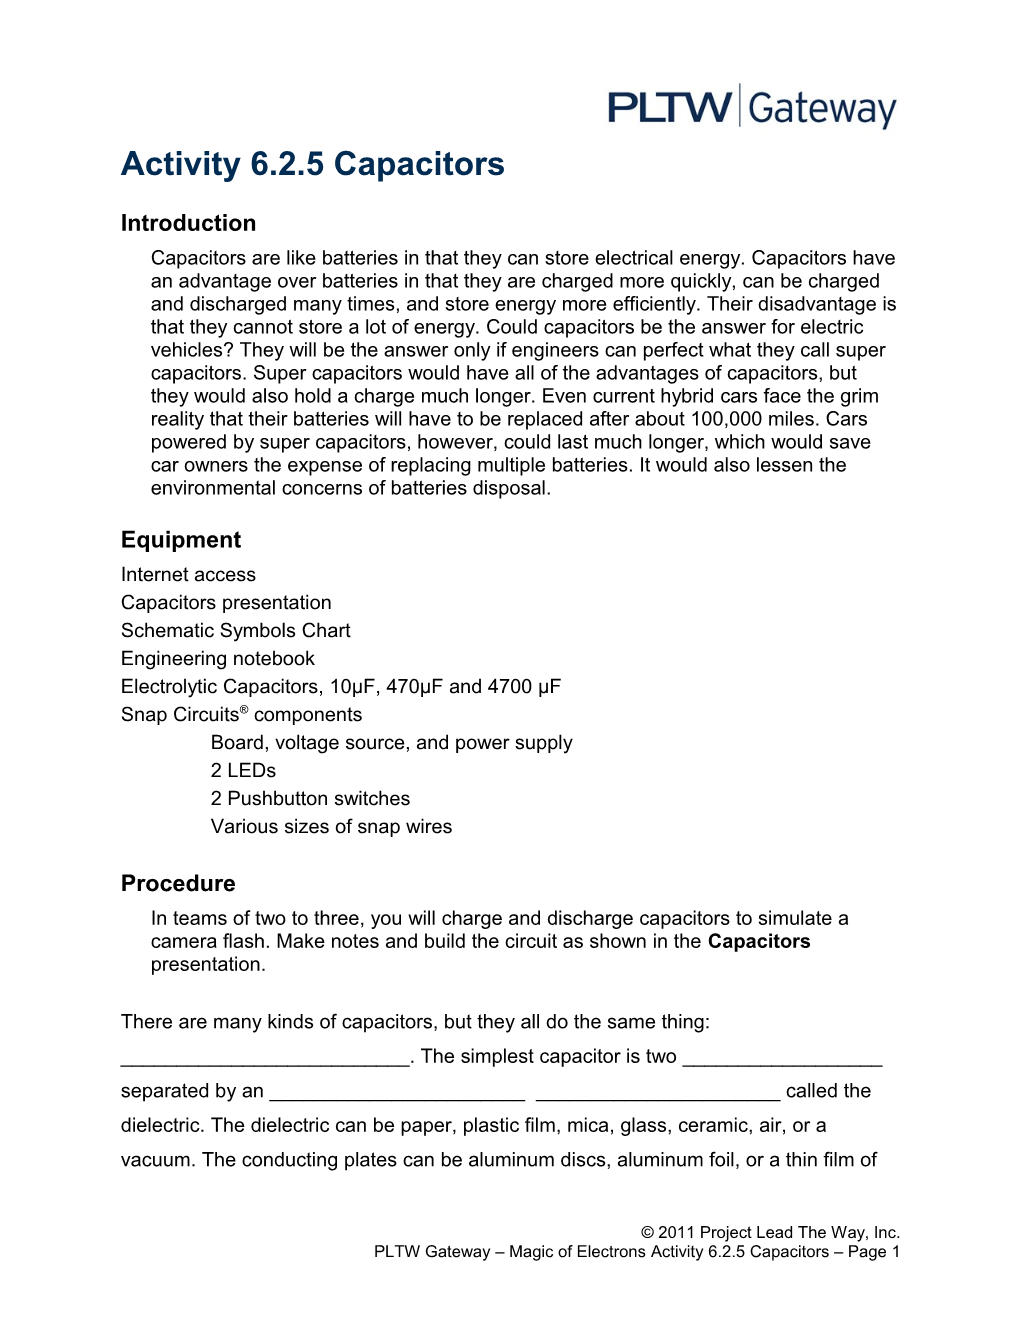 Activity 6.2.5 Capacitors